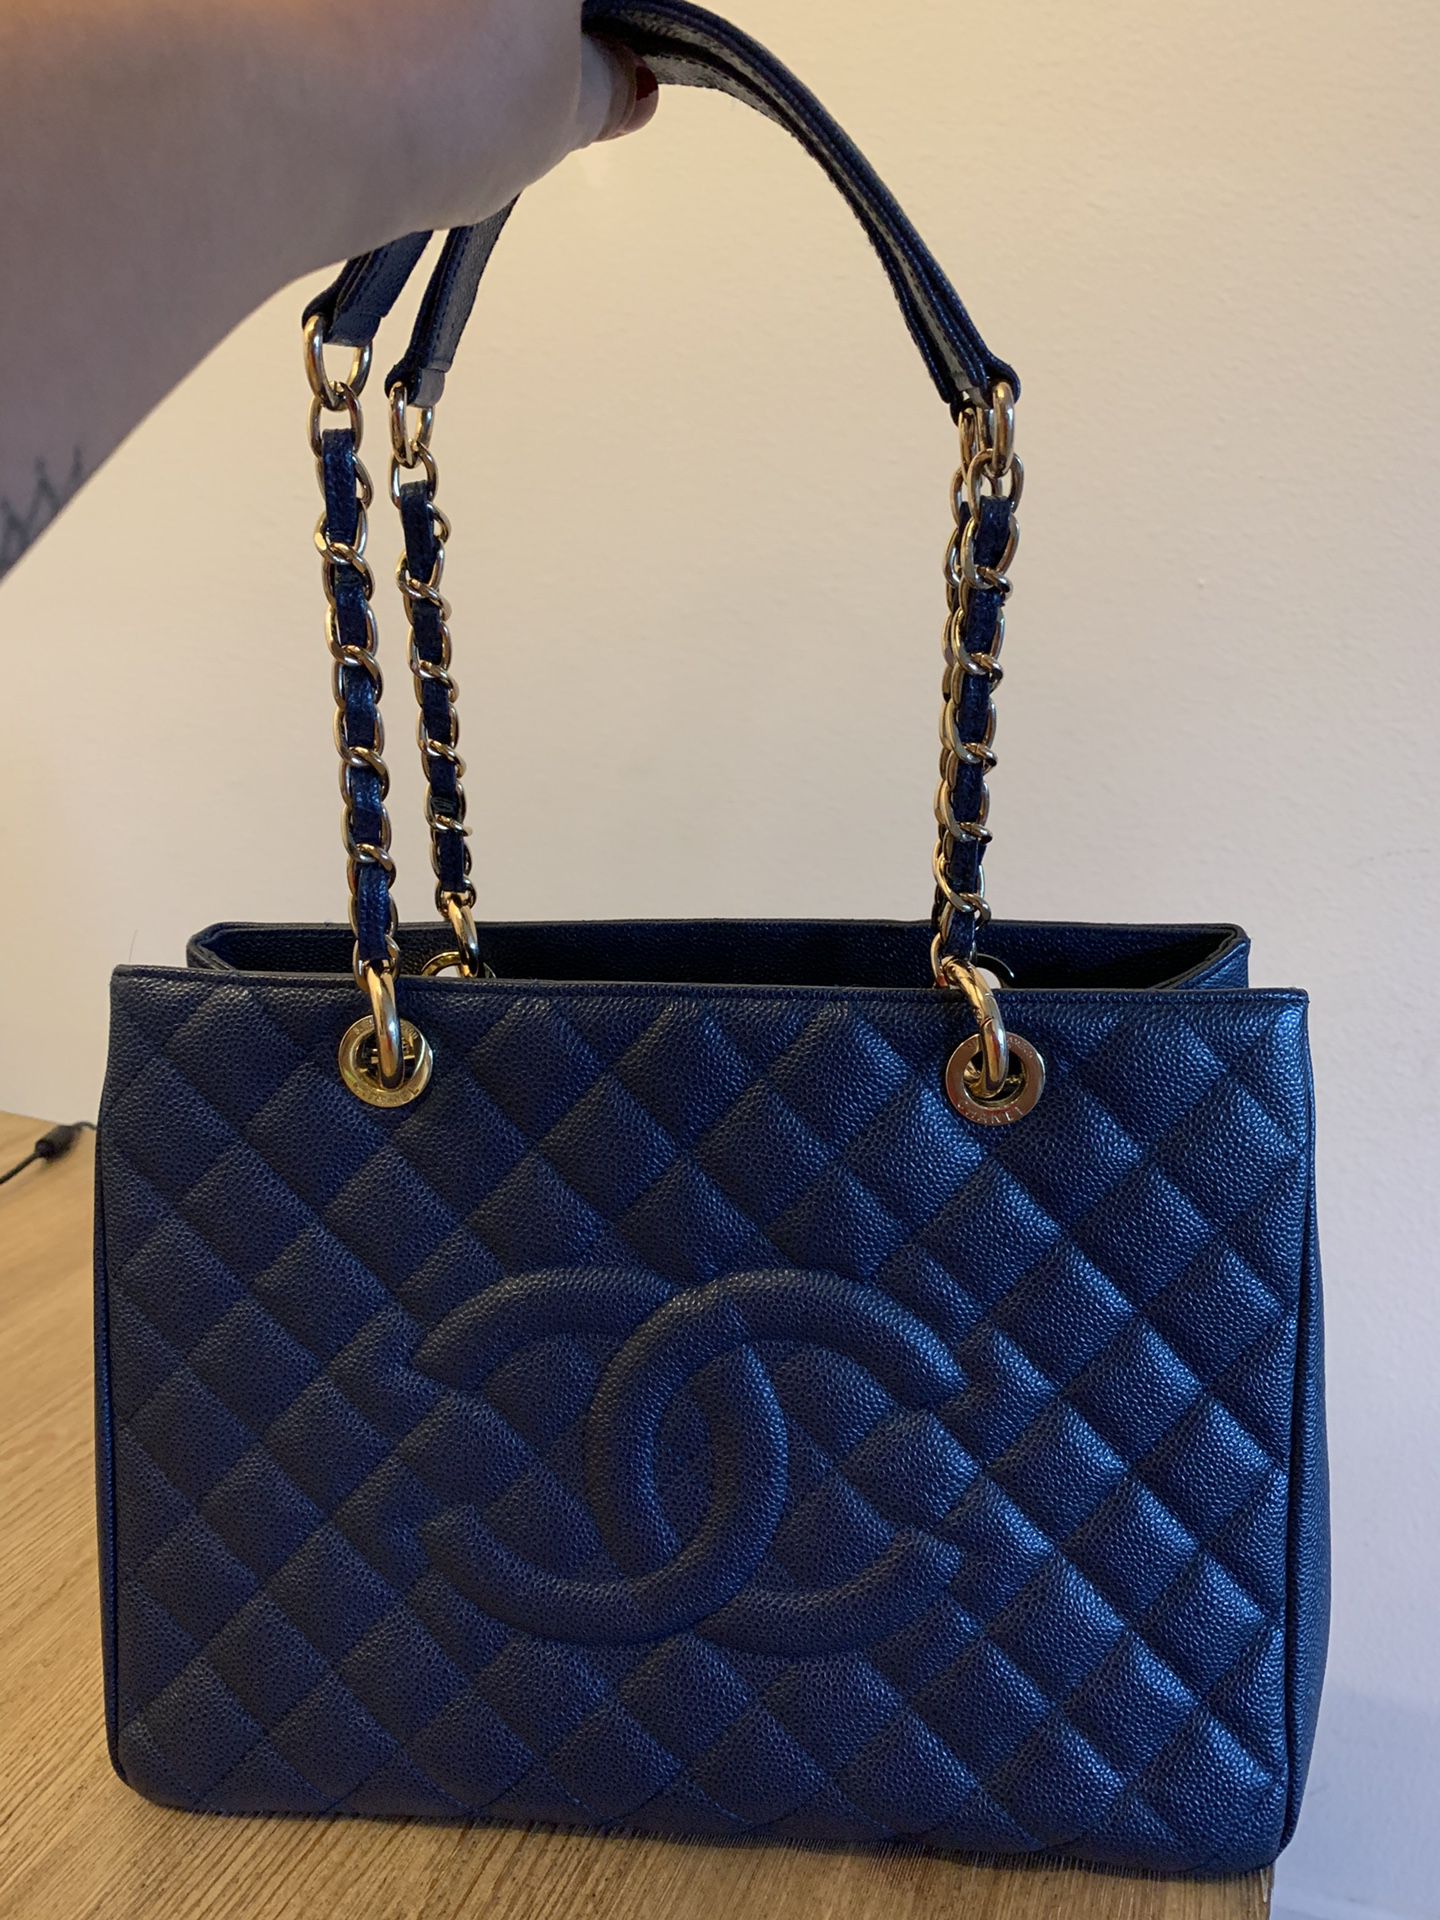 Chanel Original Bag (used - very good condition)